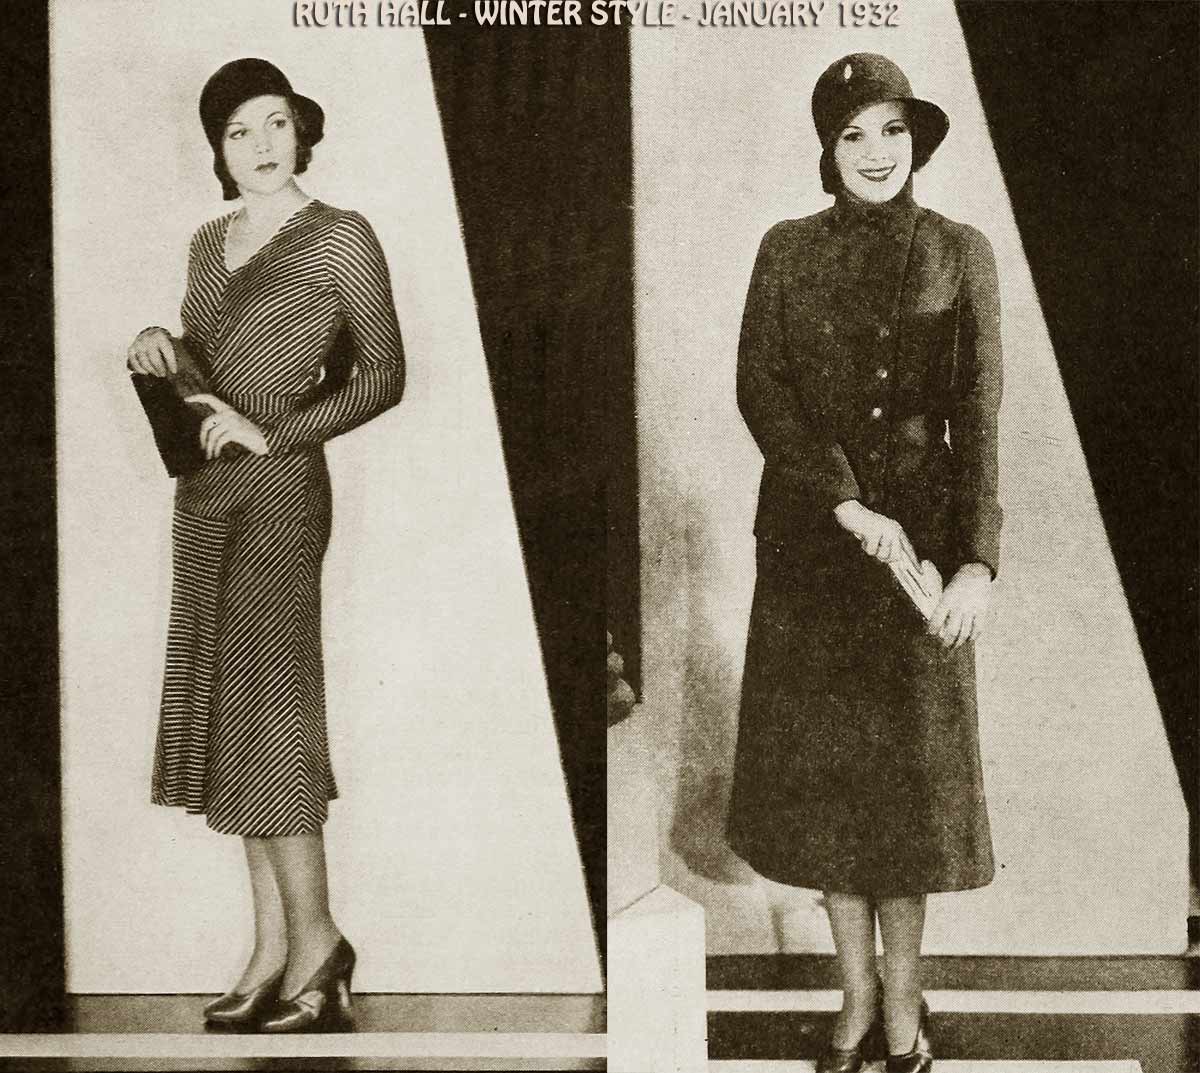 1930s-fashion-winter-style-ruth-hall.jpg